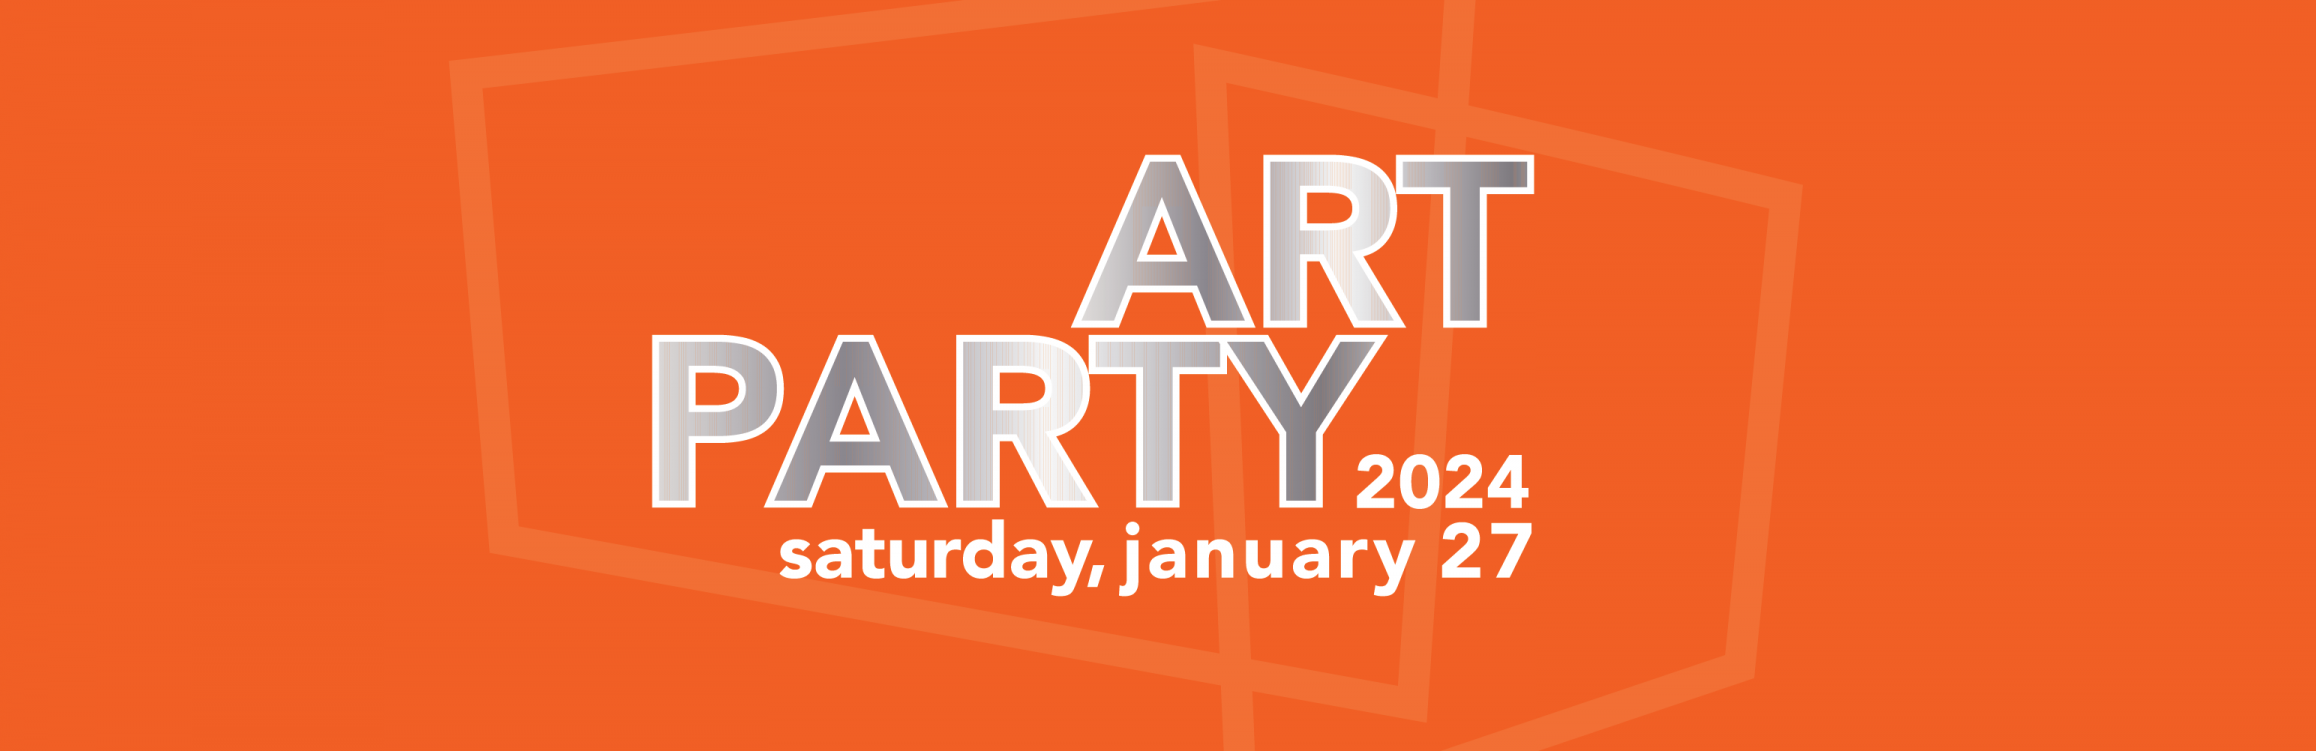 Art Party 2024 Palm Springs Art Museum